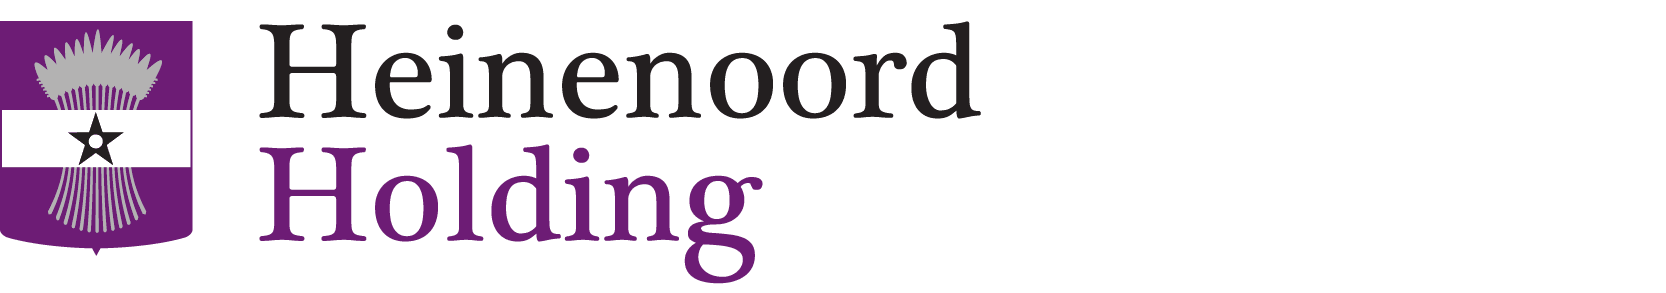 Fidus.nl/ Heinenoord logo